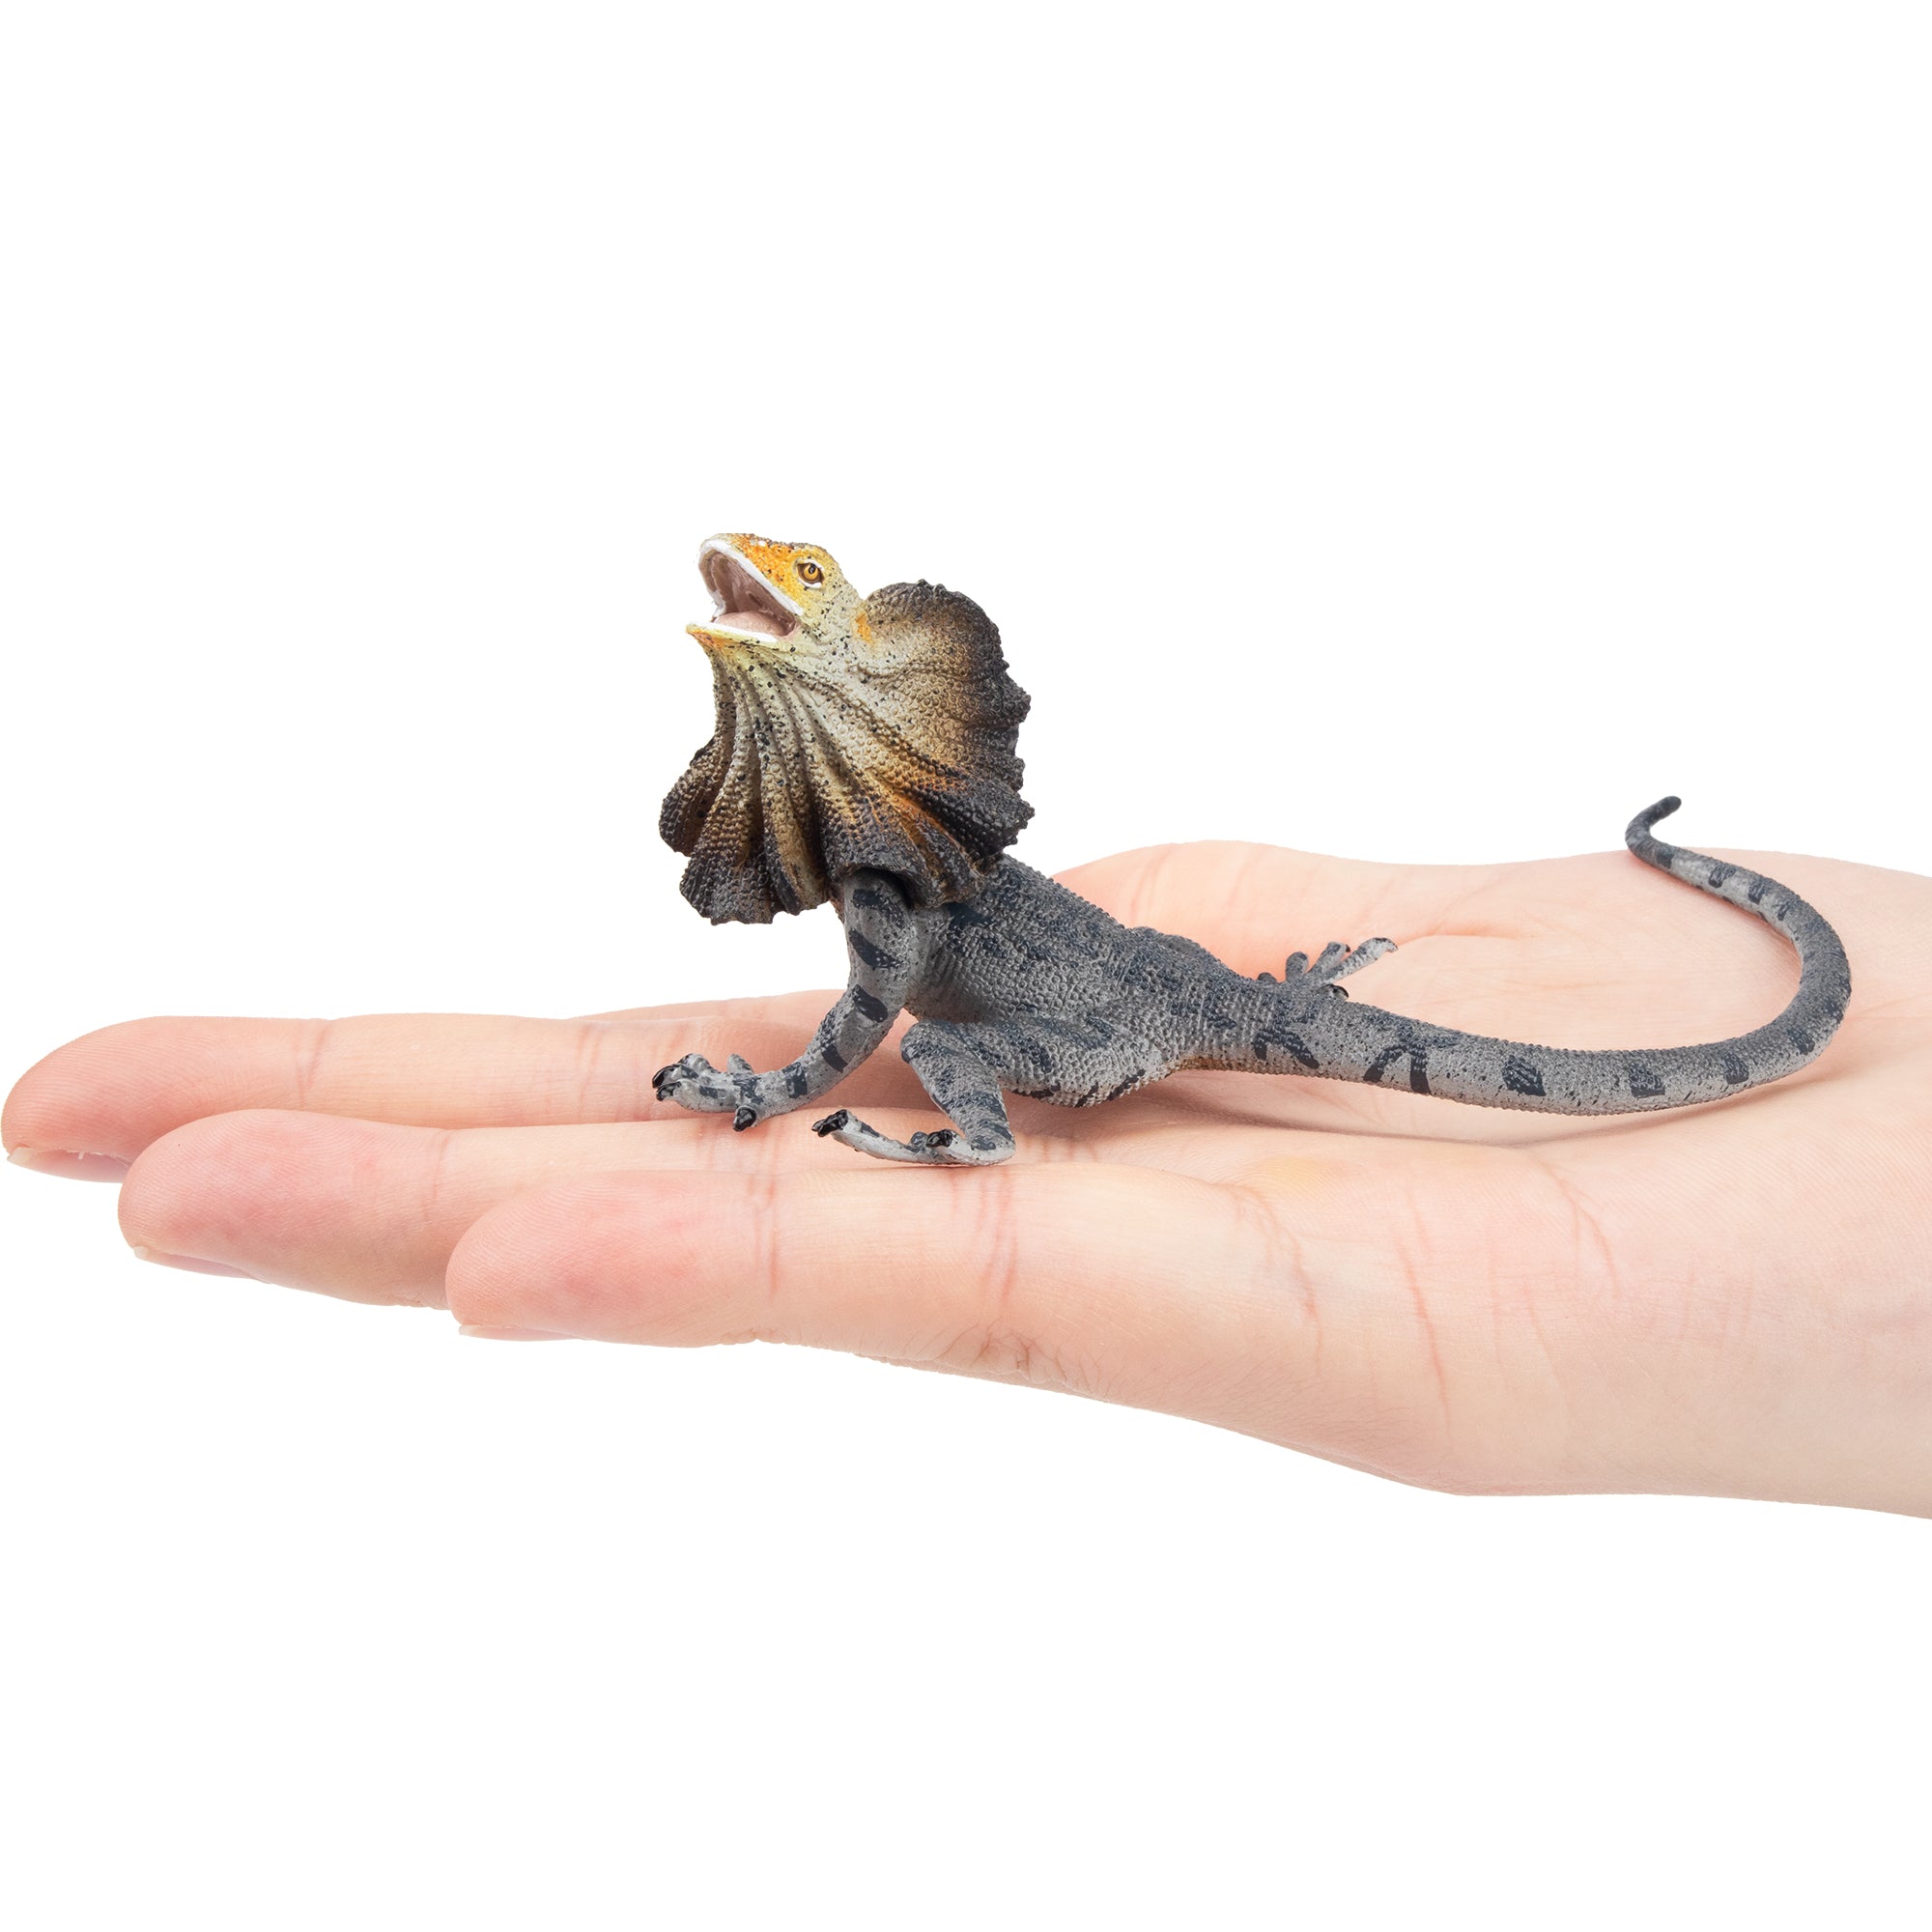 Toymany Umbrella Thorn Lizard Figurine Toy-on hand